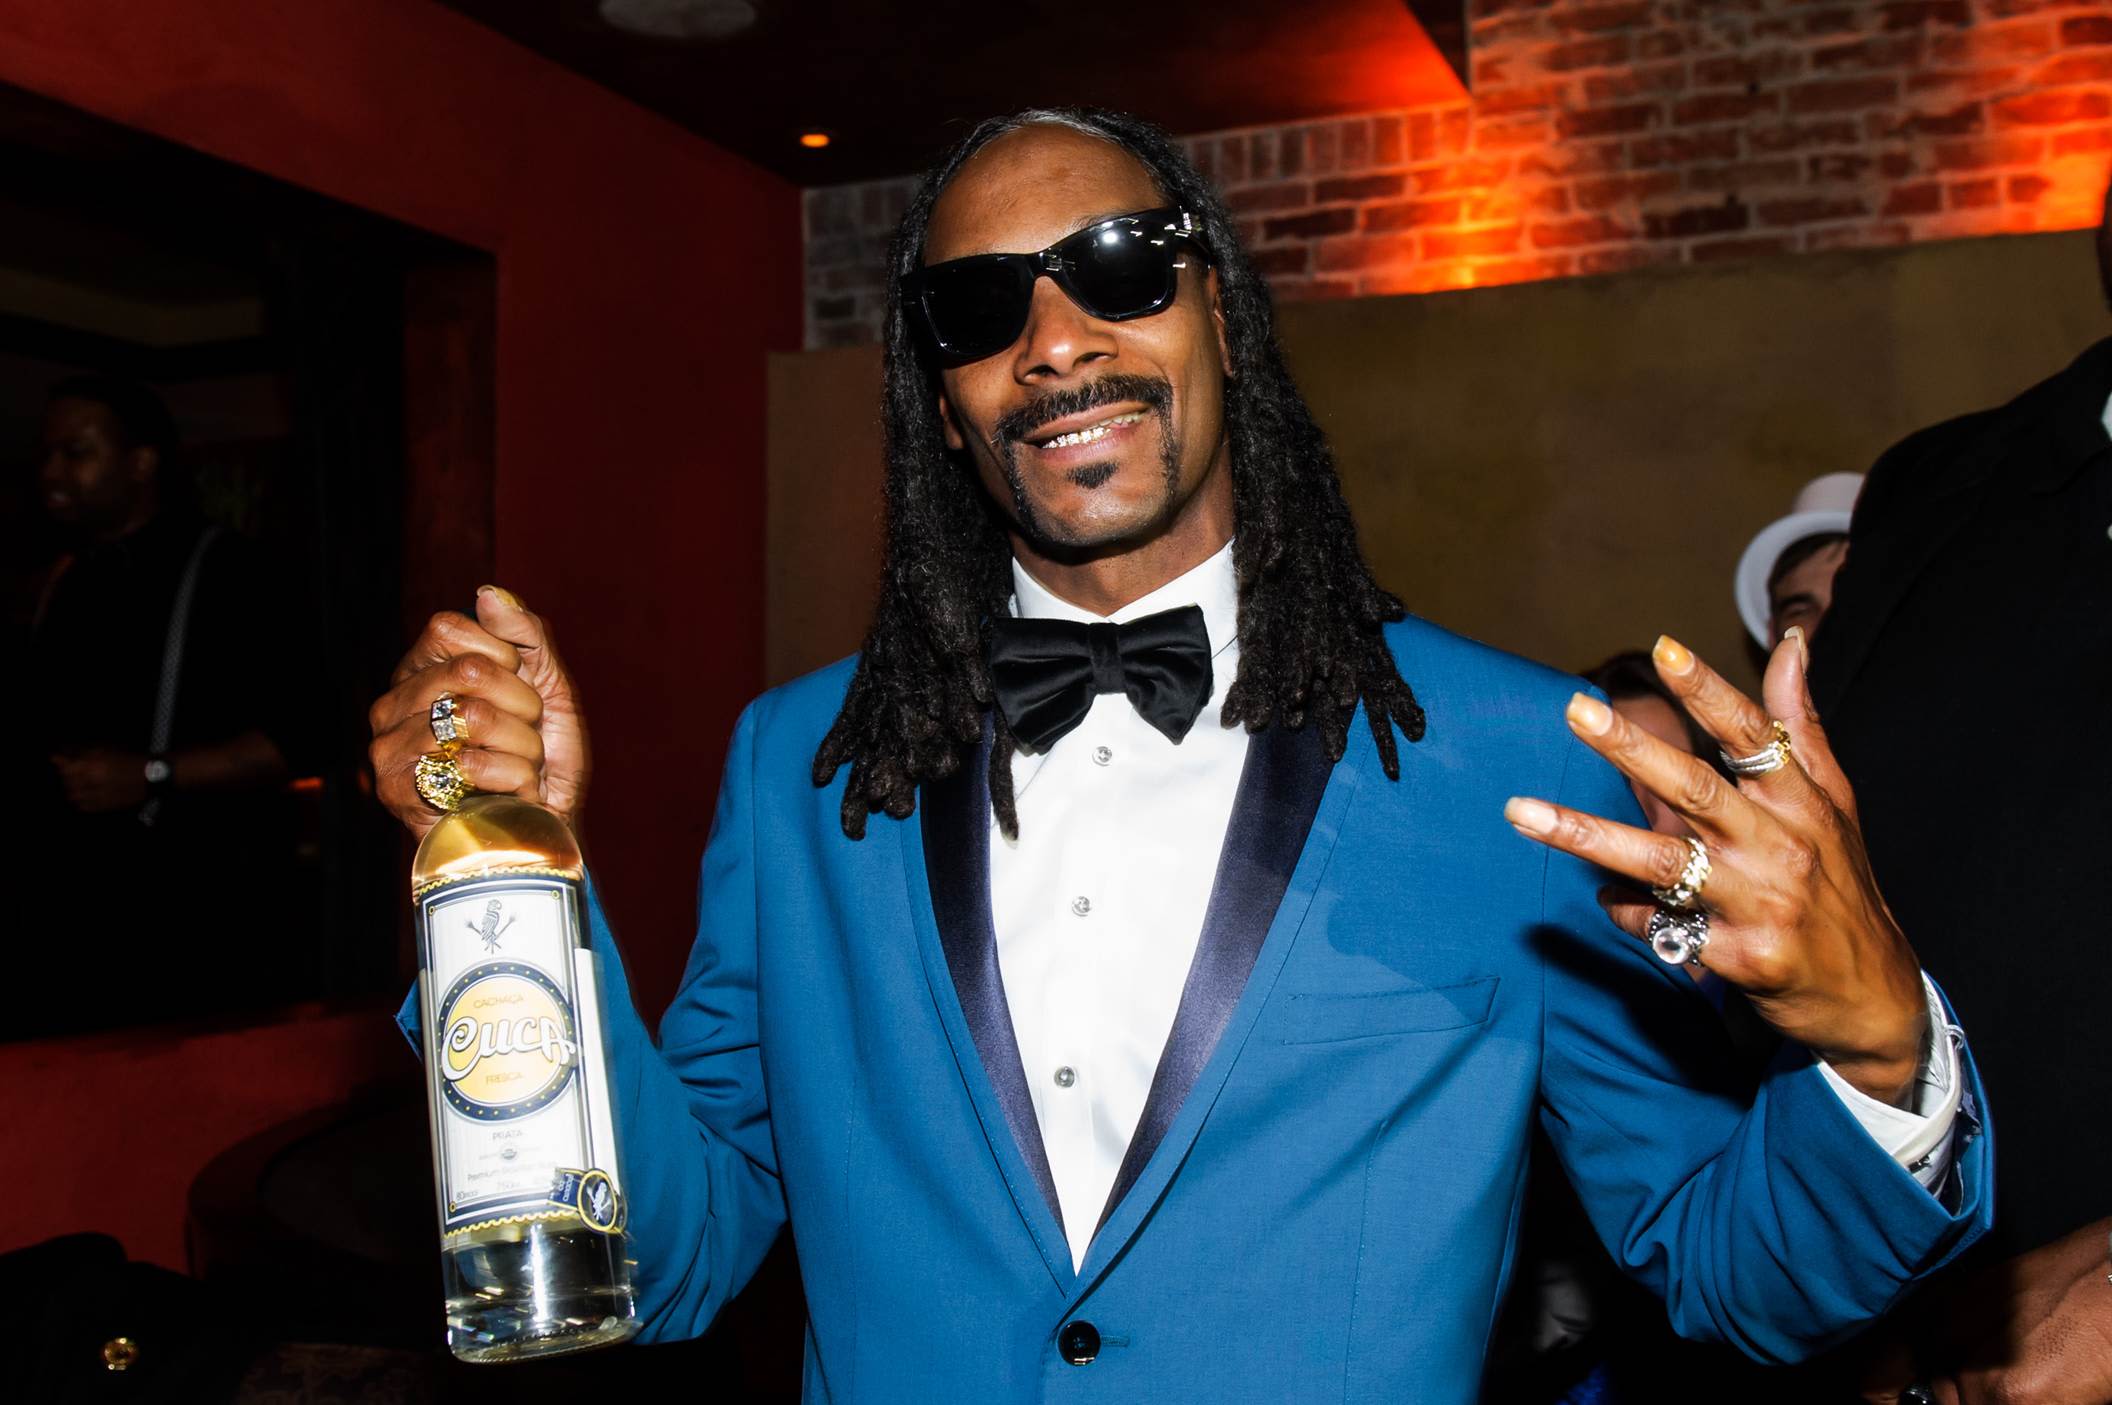 Snoop Dogg's bet on an obscure Brazilian liquor